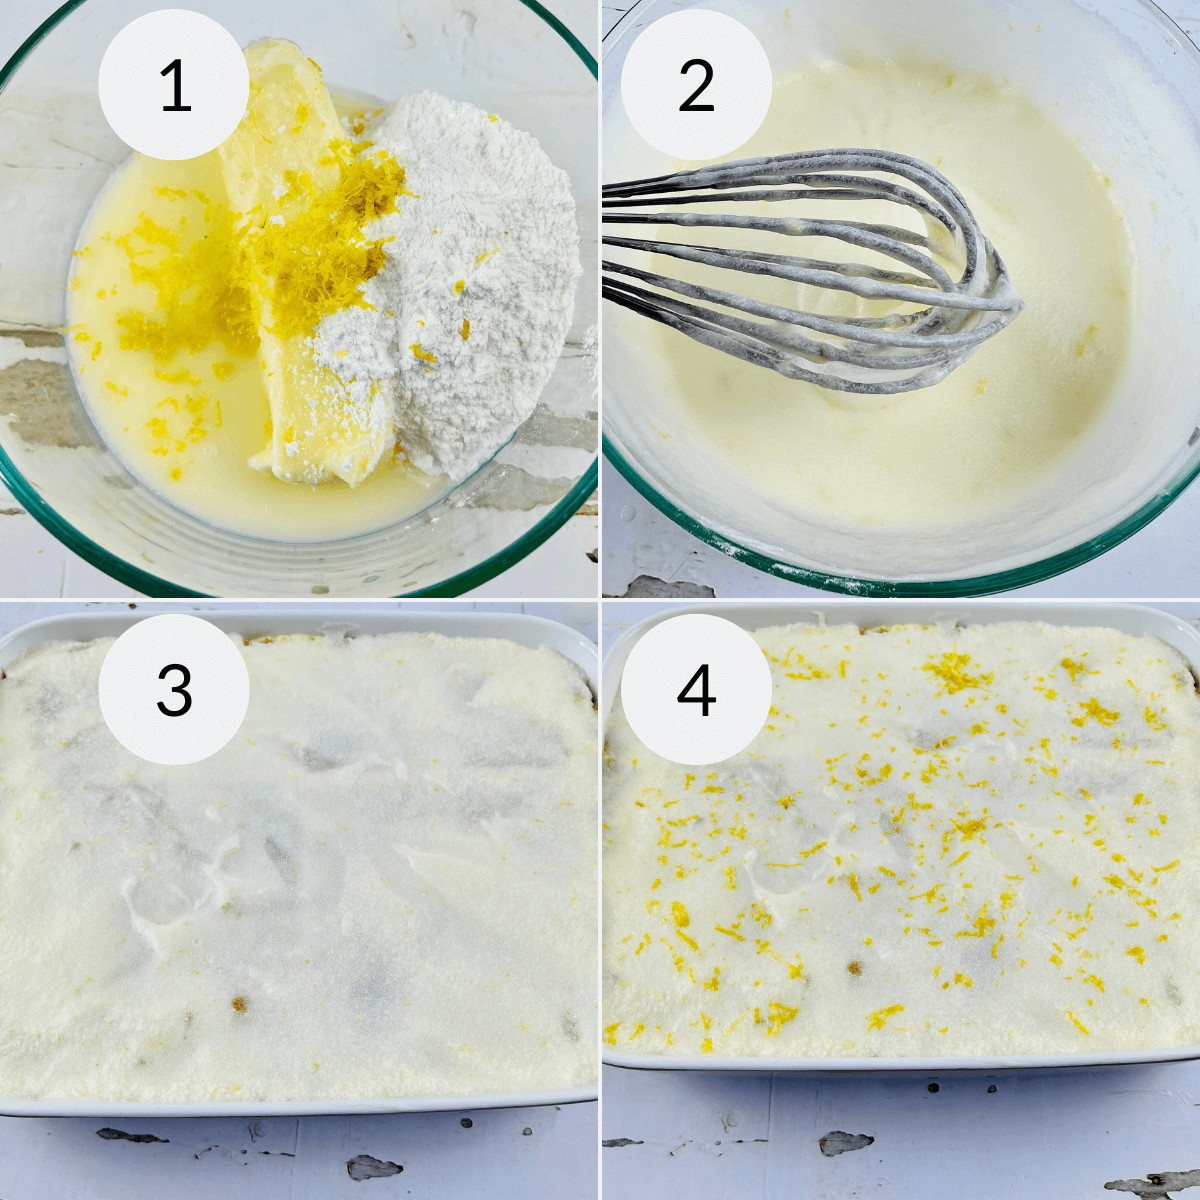 Preparing the lemon frosting for the no bake ice box cake.